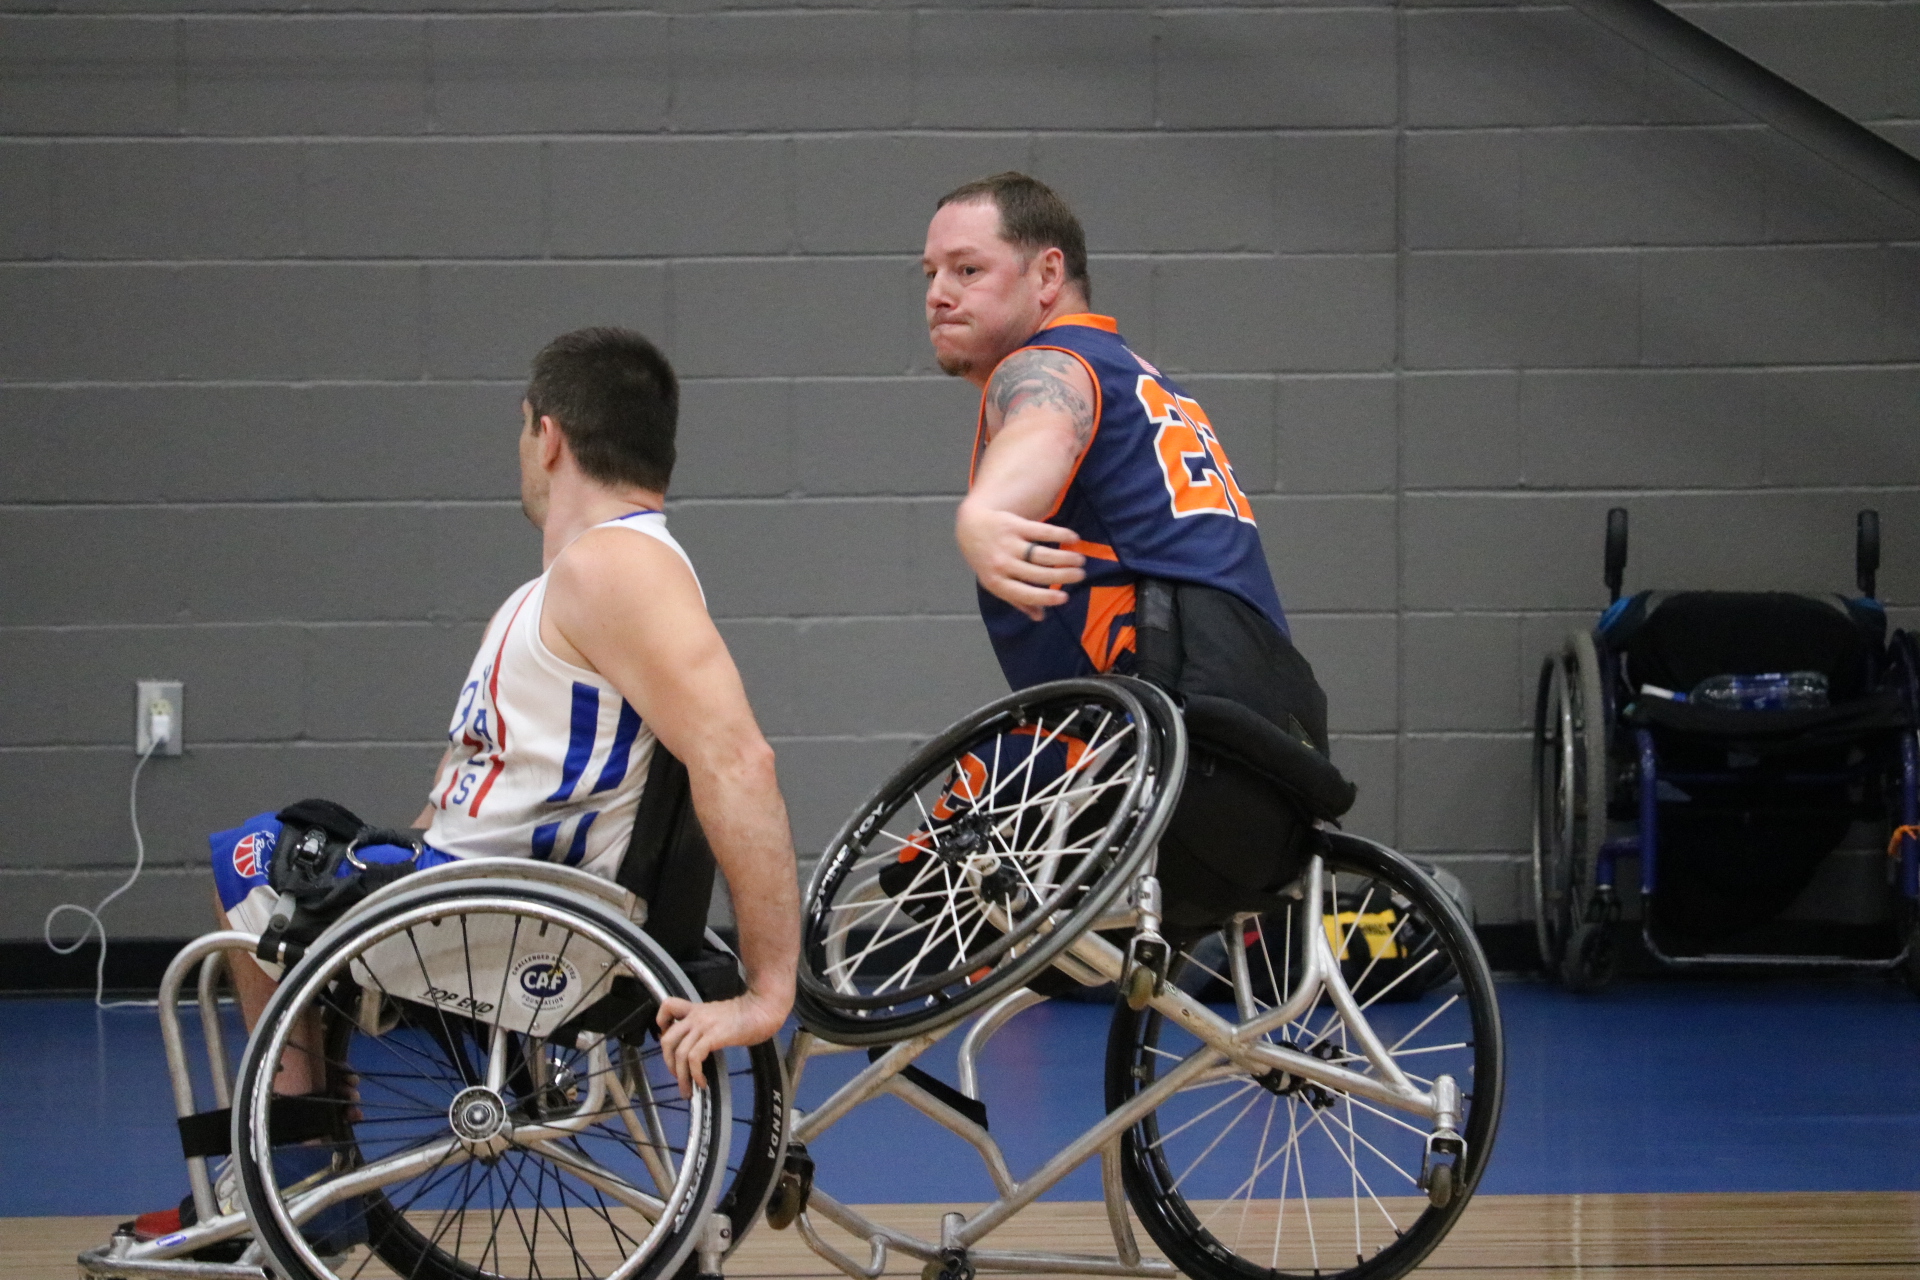 Two men playing wheelchair basketball